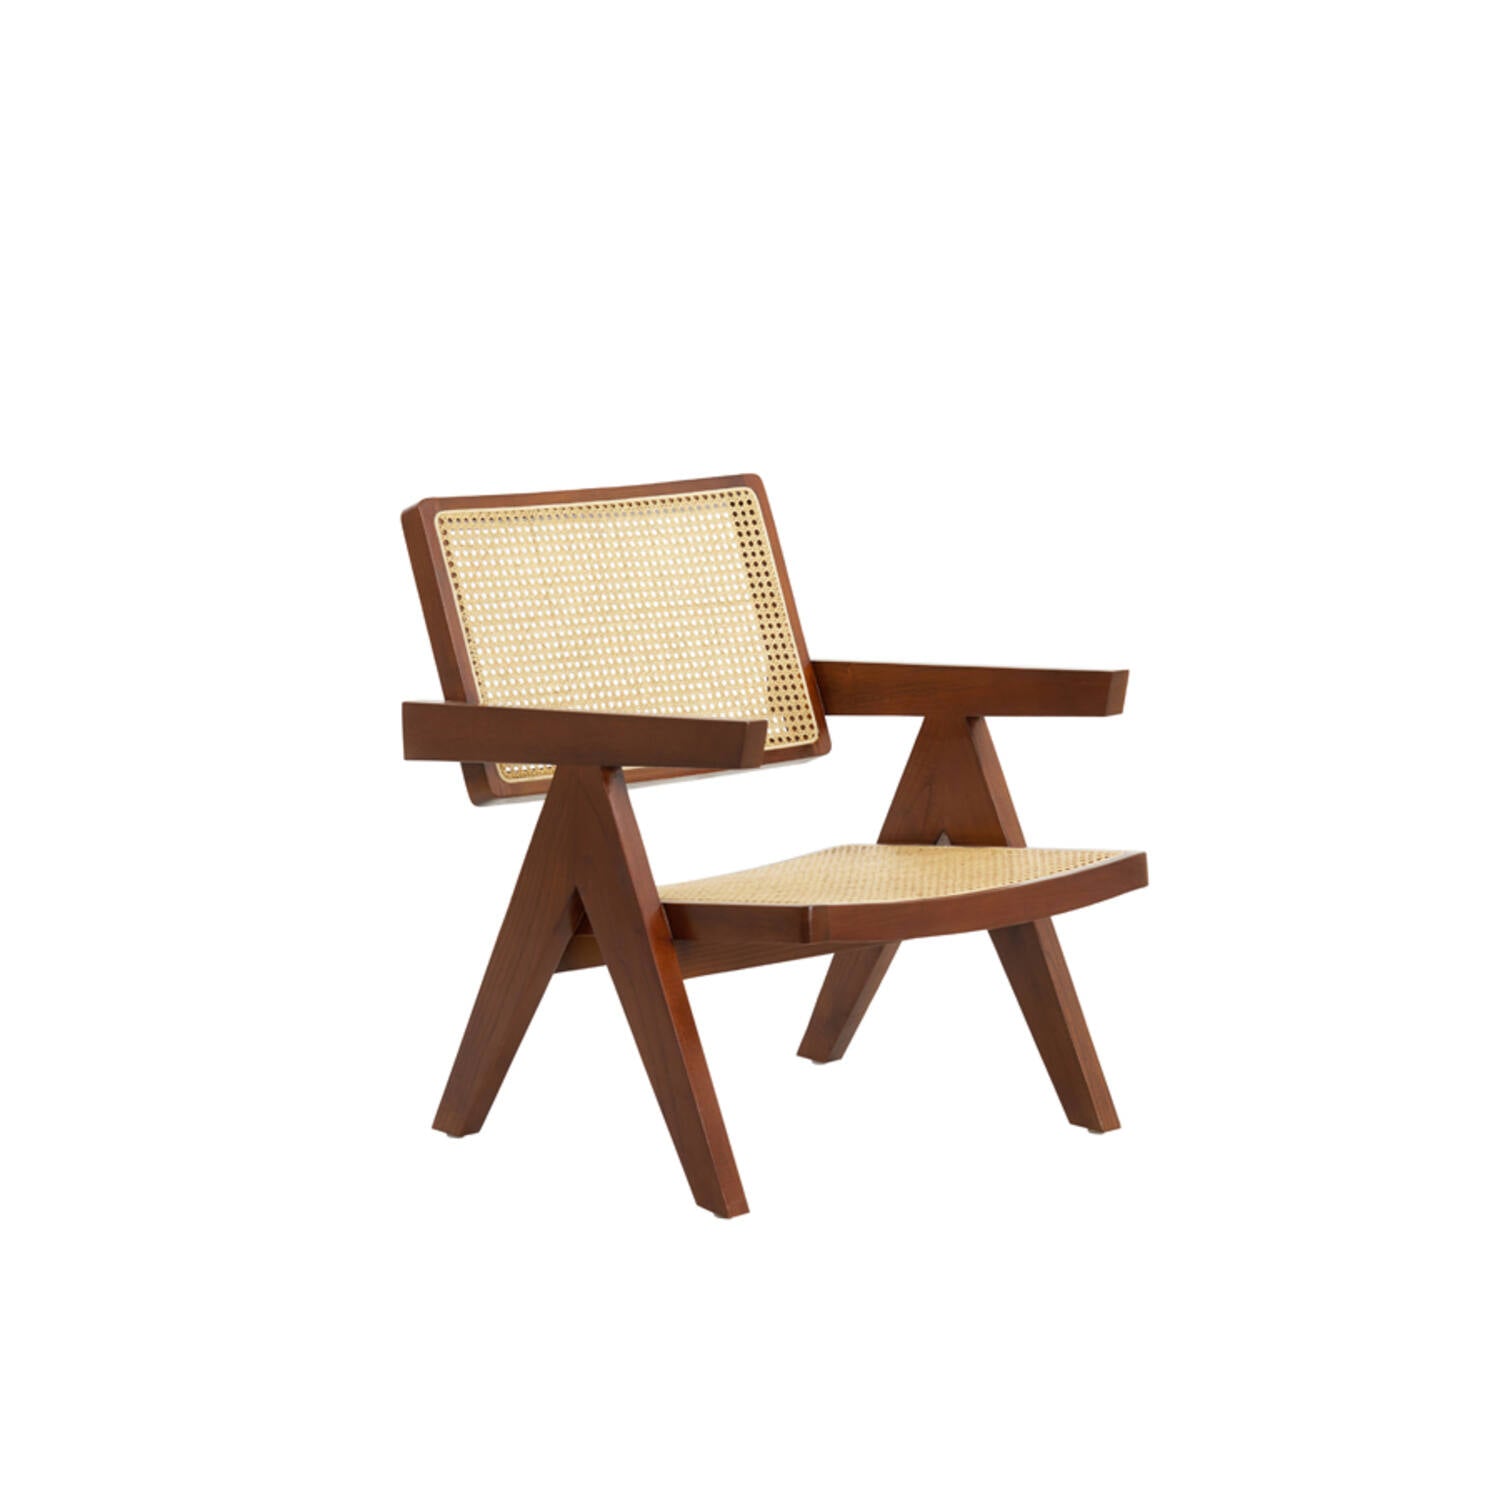 mid-century Pierre Jeanneret japandi style Rattan chair